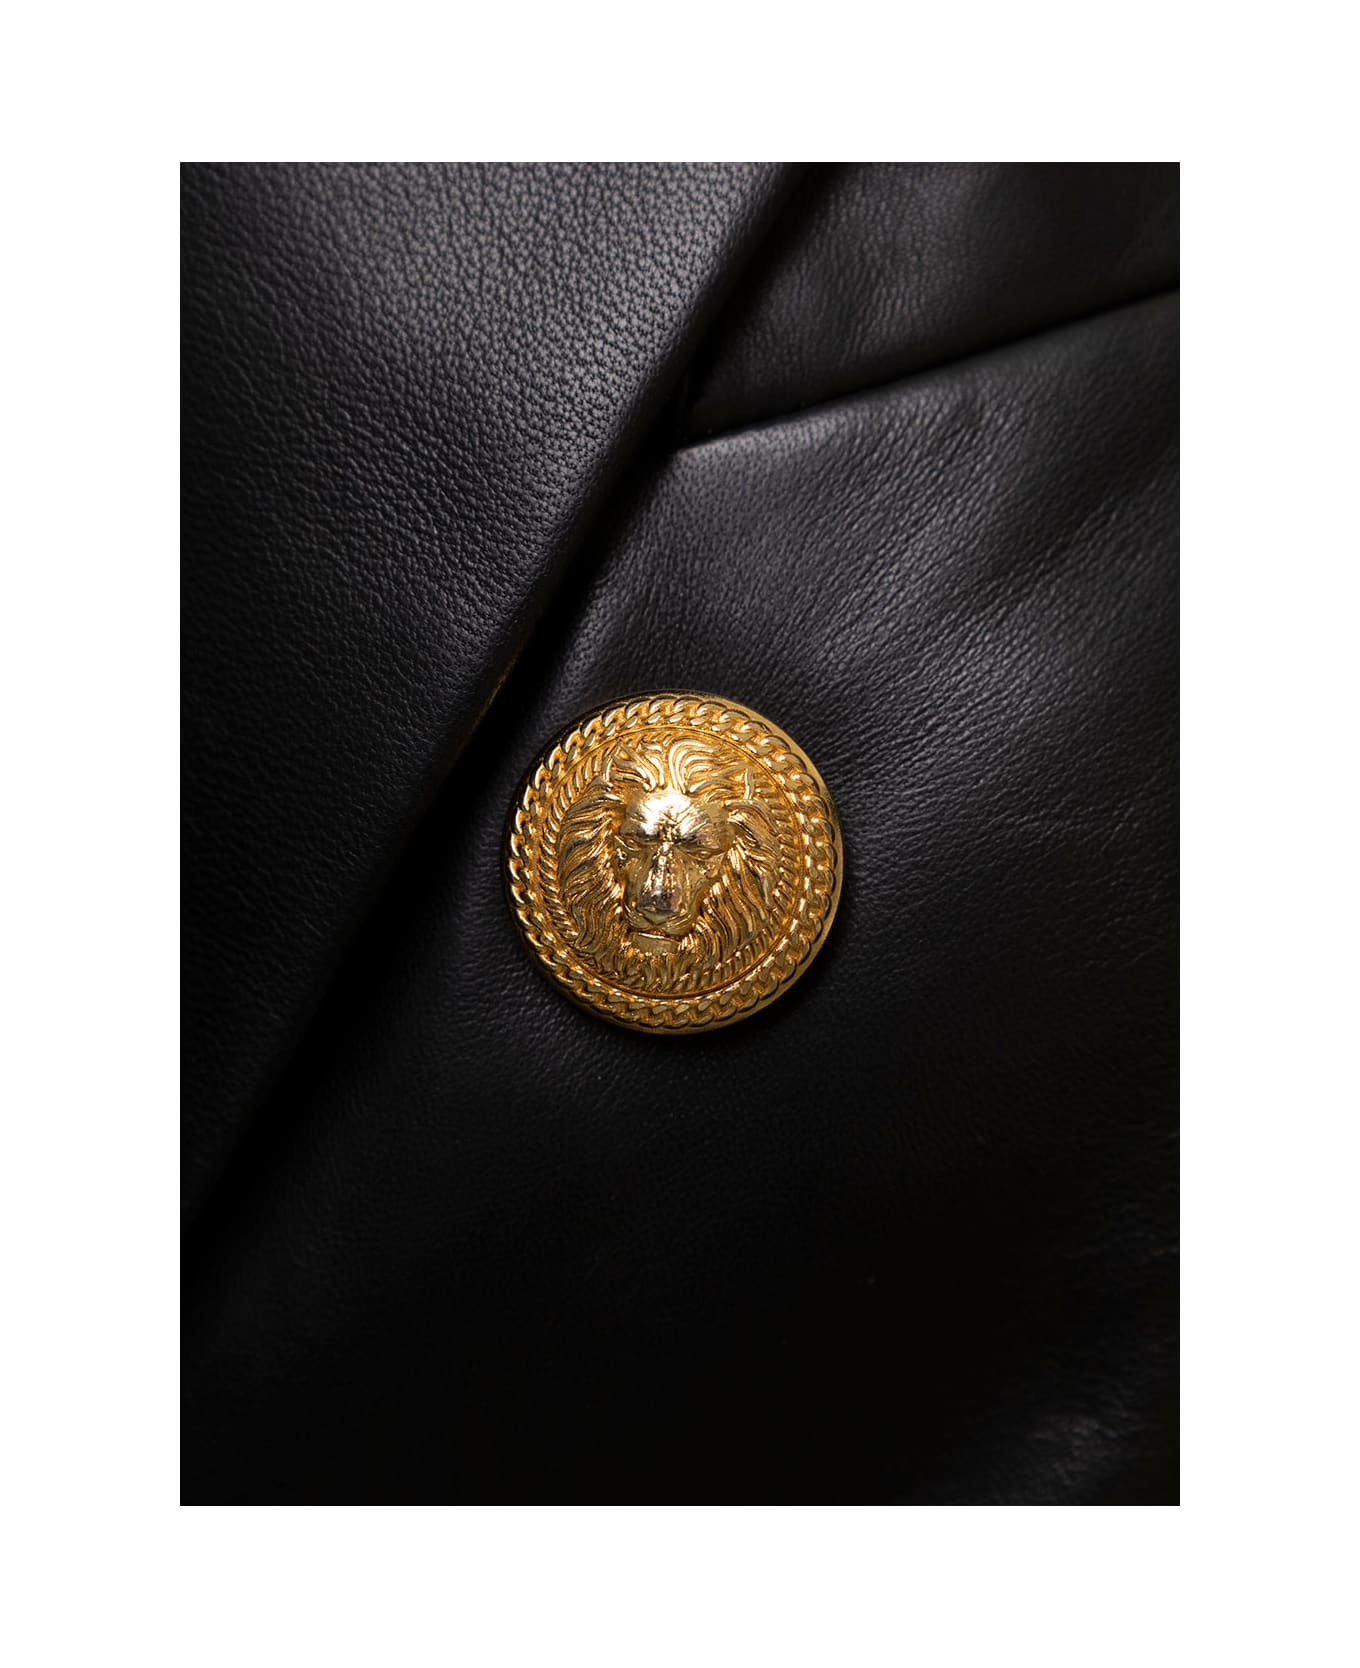 Balmain 6 Buttons Leather Jacket - Black